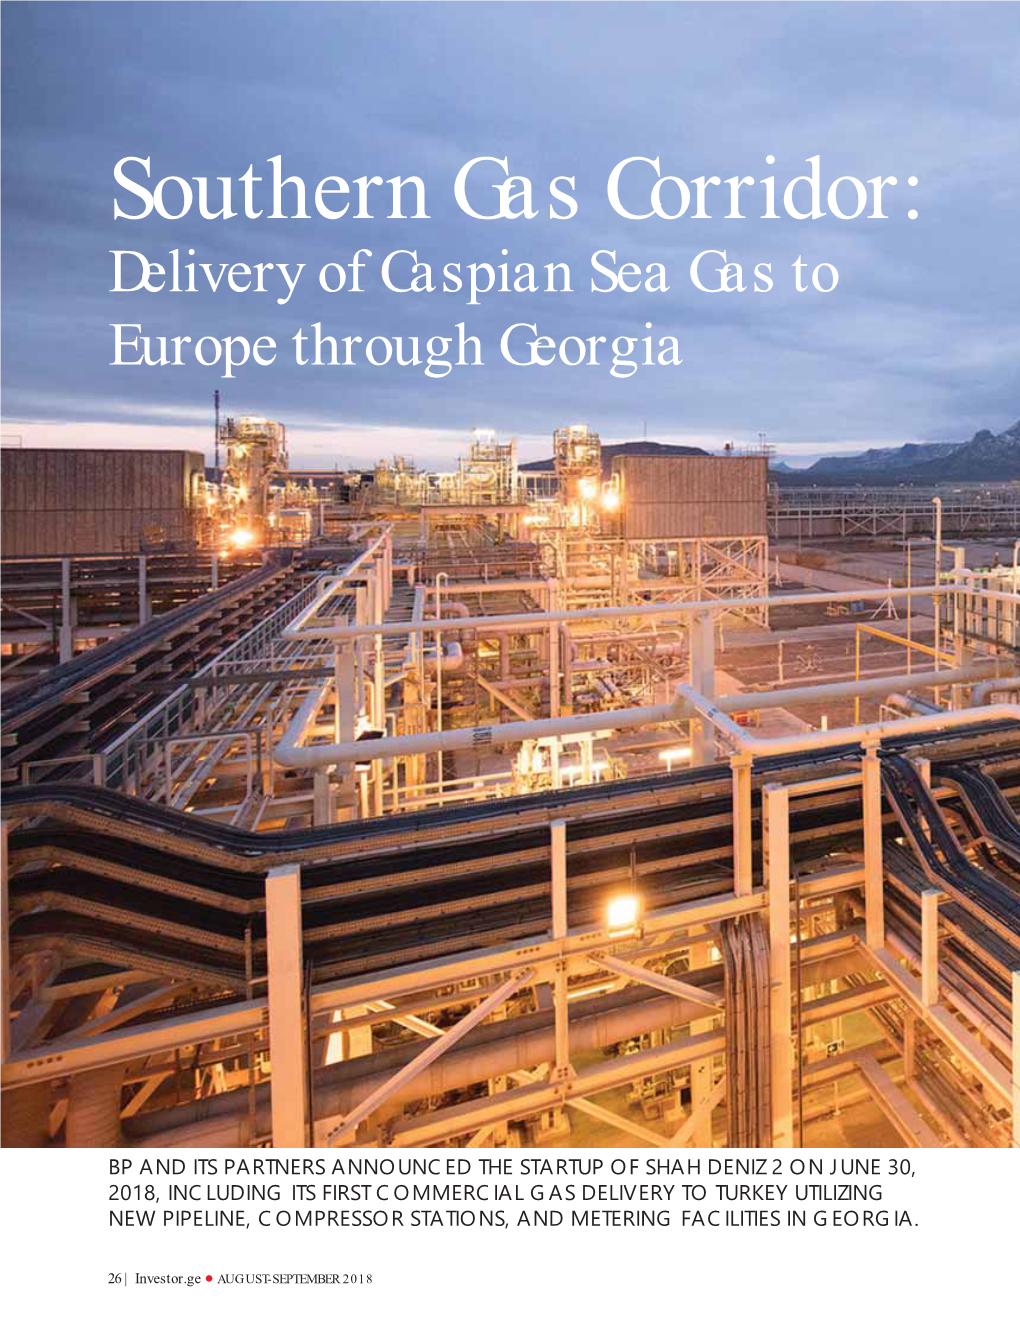 Southern Gas Corridor: Delivery of Caspian Sea Gas to Europe Through Georgia